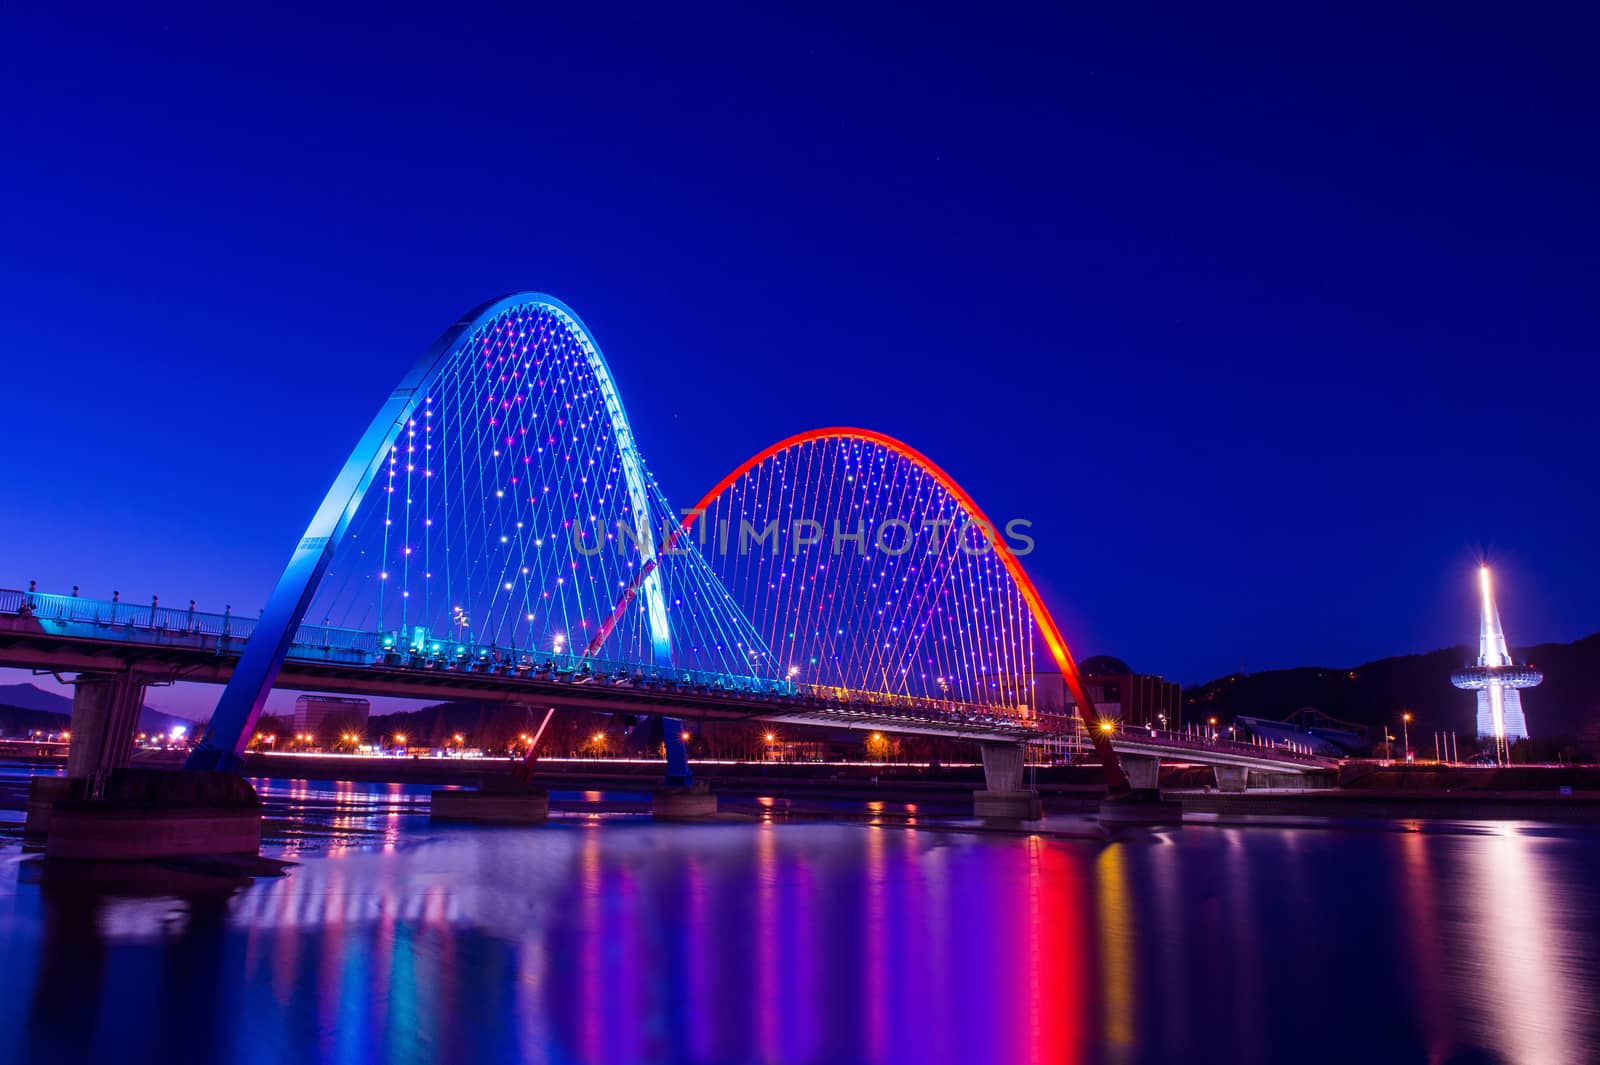 Expro bridge in daejeon,korea. by gutarphotoghaphy